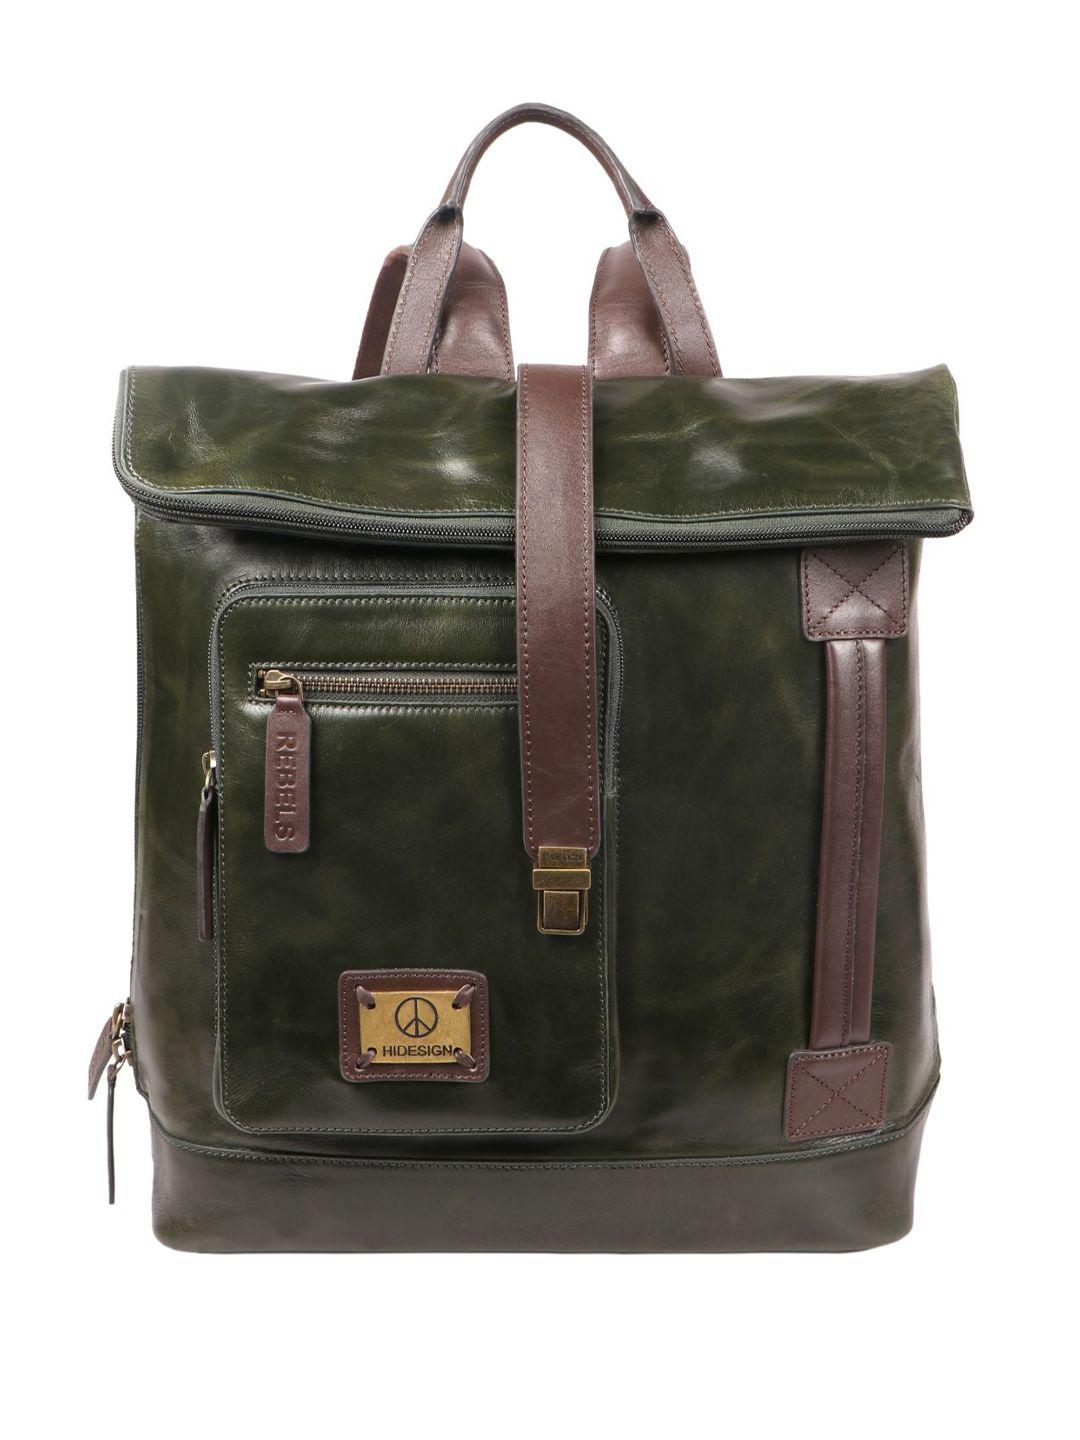 hidesign men leather ergonomic backpack